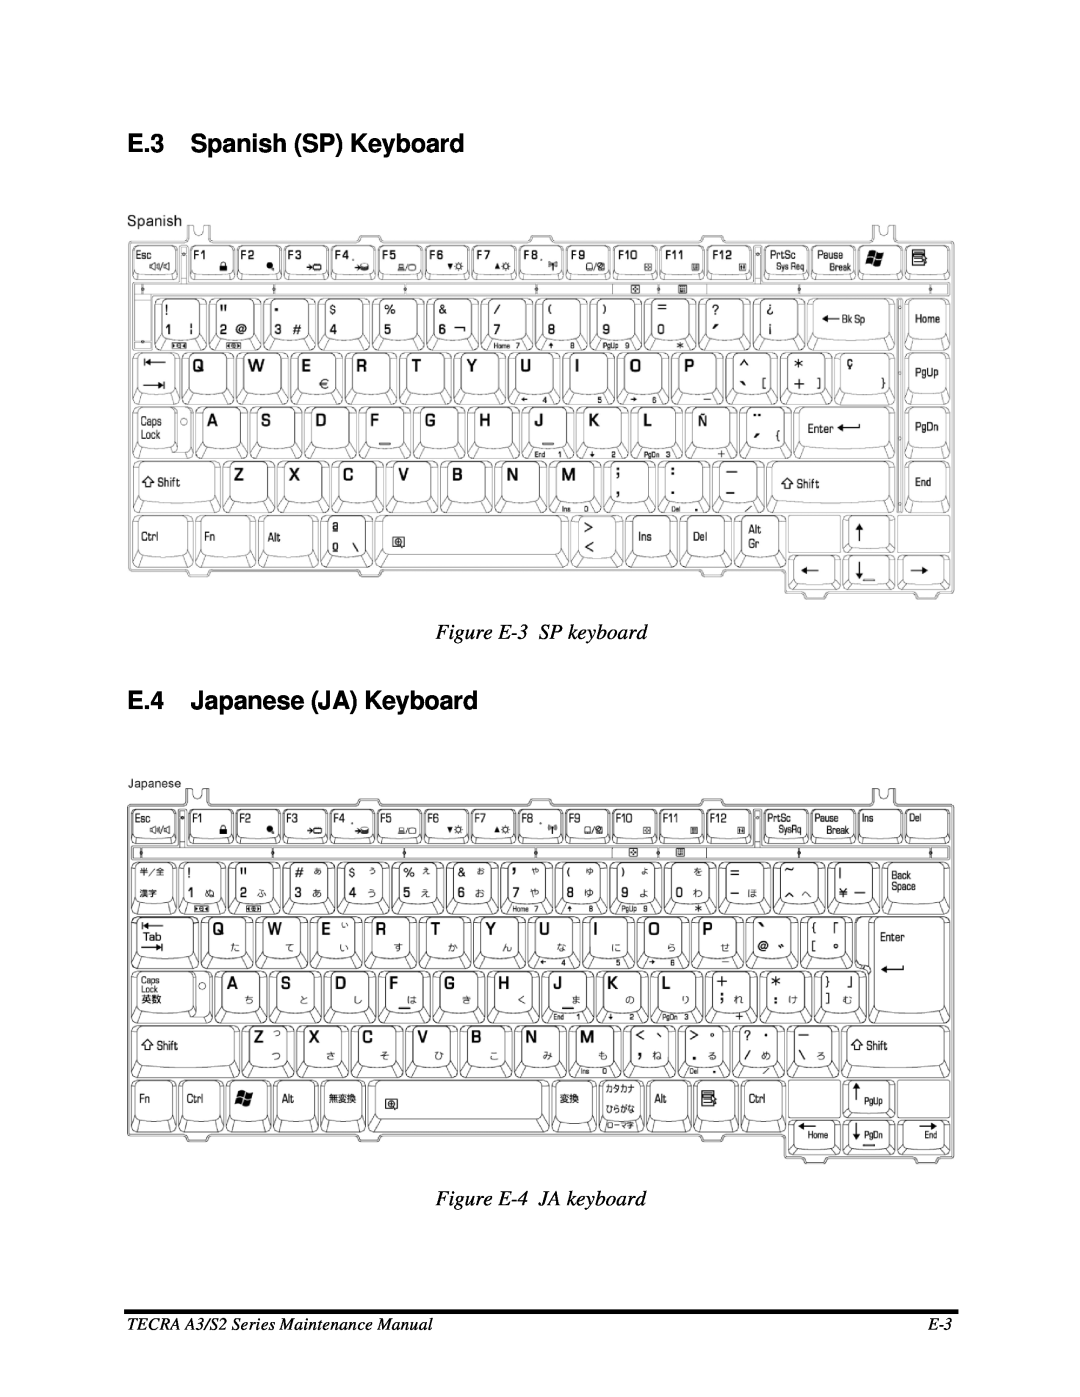 Toshiba S2 manual E.3 Spanish SP Keyboard, E.4 Japanese JA Keyboard, Figure E-3 SP keyboard, Figure E-4 JA keyboard 